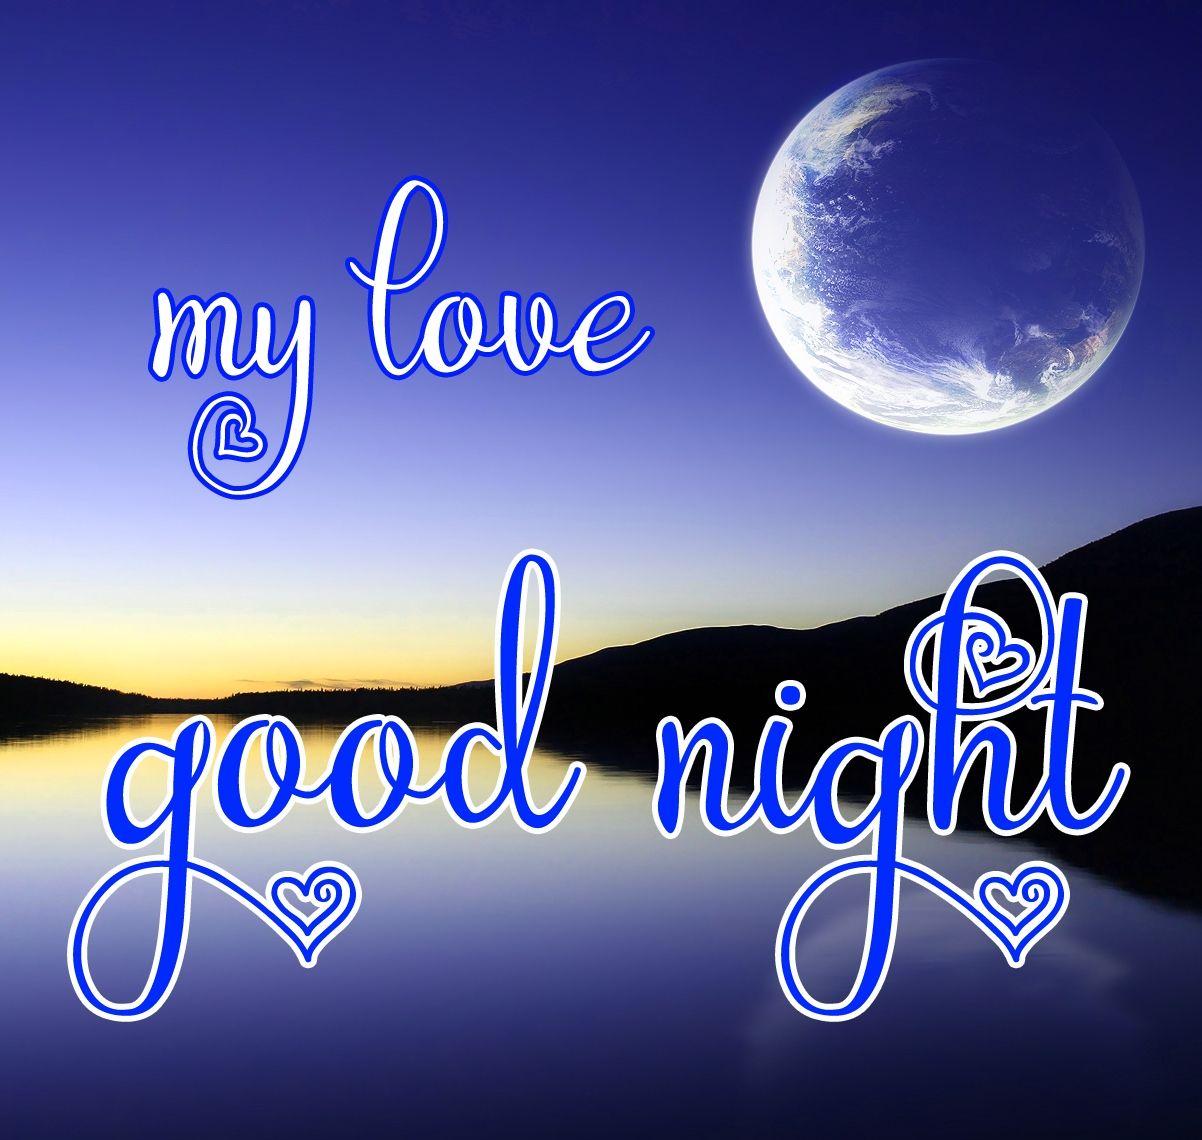 New Good Night Wallpaper Photo Download - GoodNightImge 2023